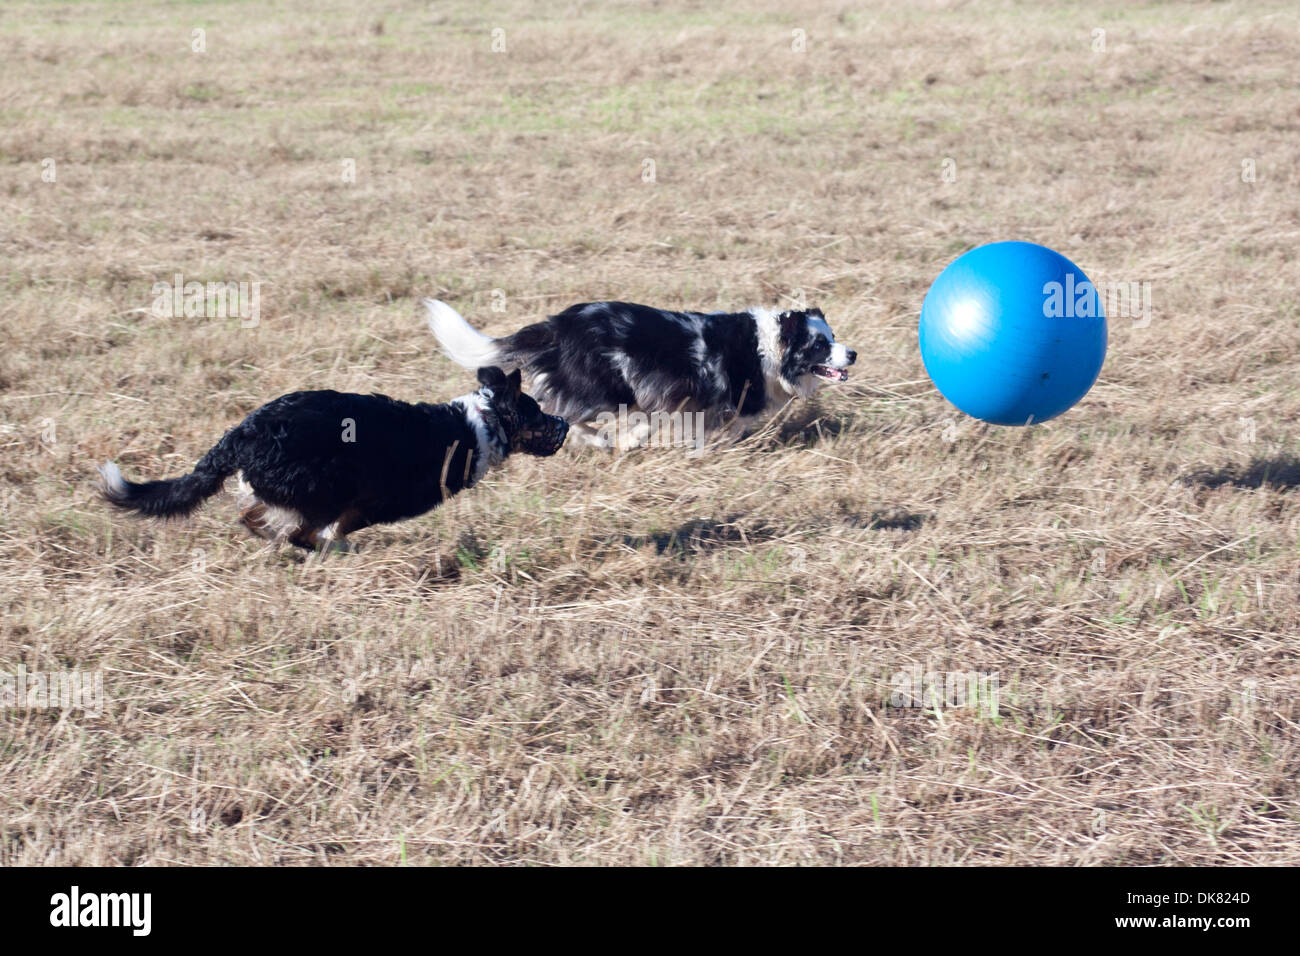 treibball action: two border collies chasing blue gym ball Stock Photo